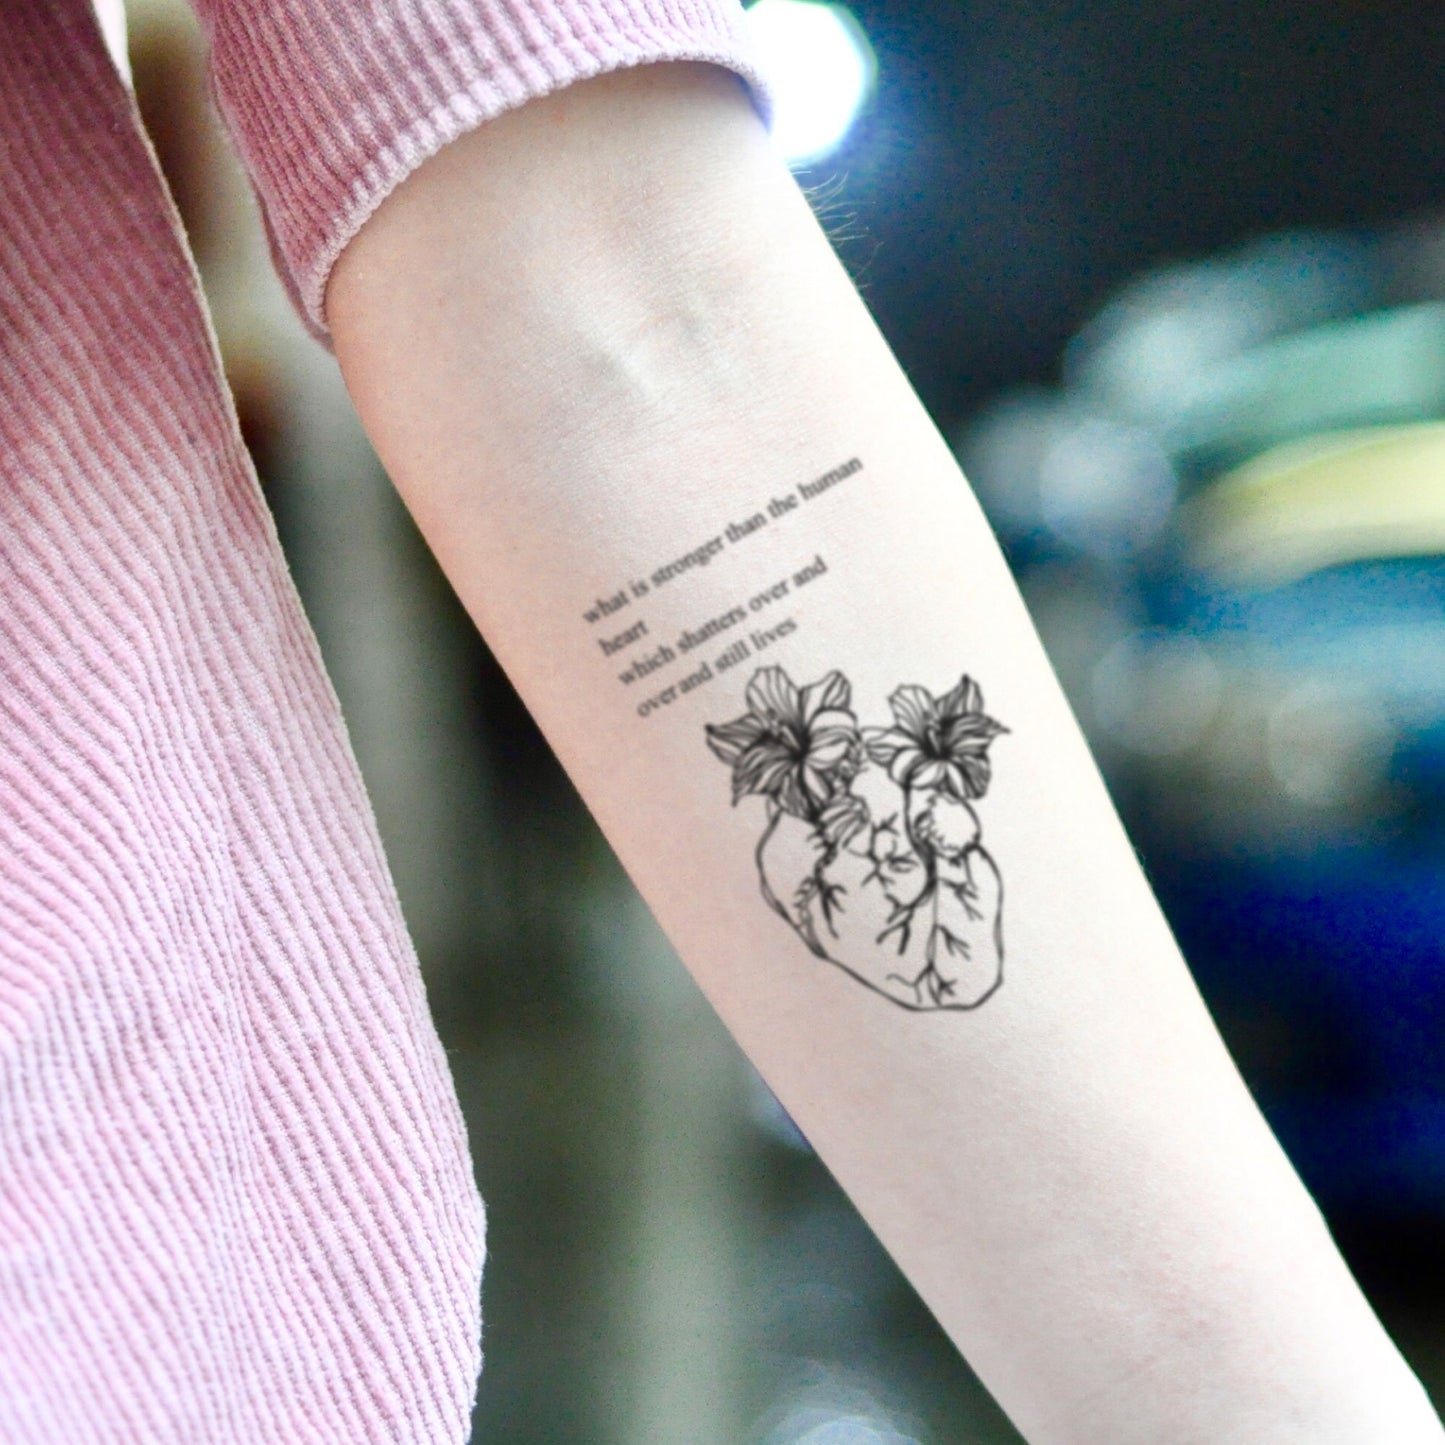 fake small rupi kaur poem quote flower heart illustrative temporary tattoo sticker design idea on inner arm